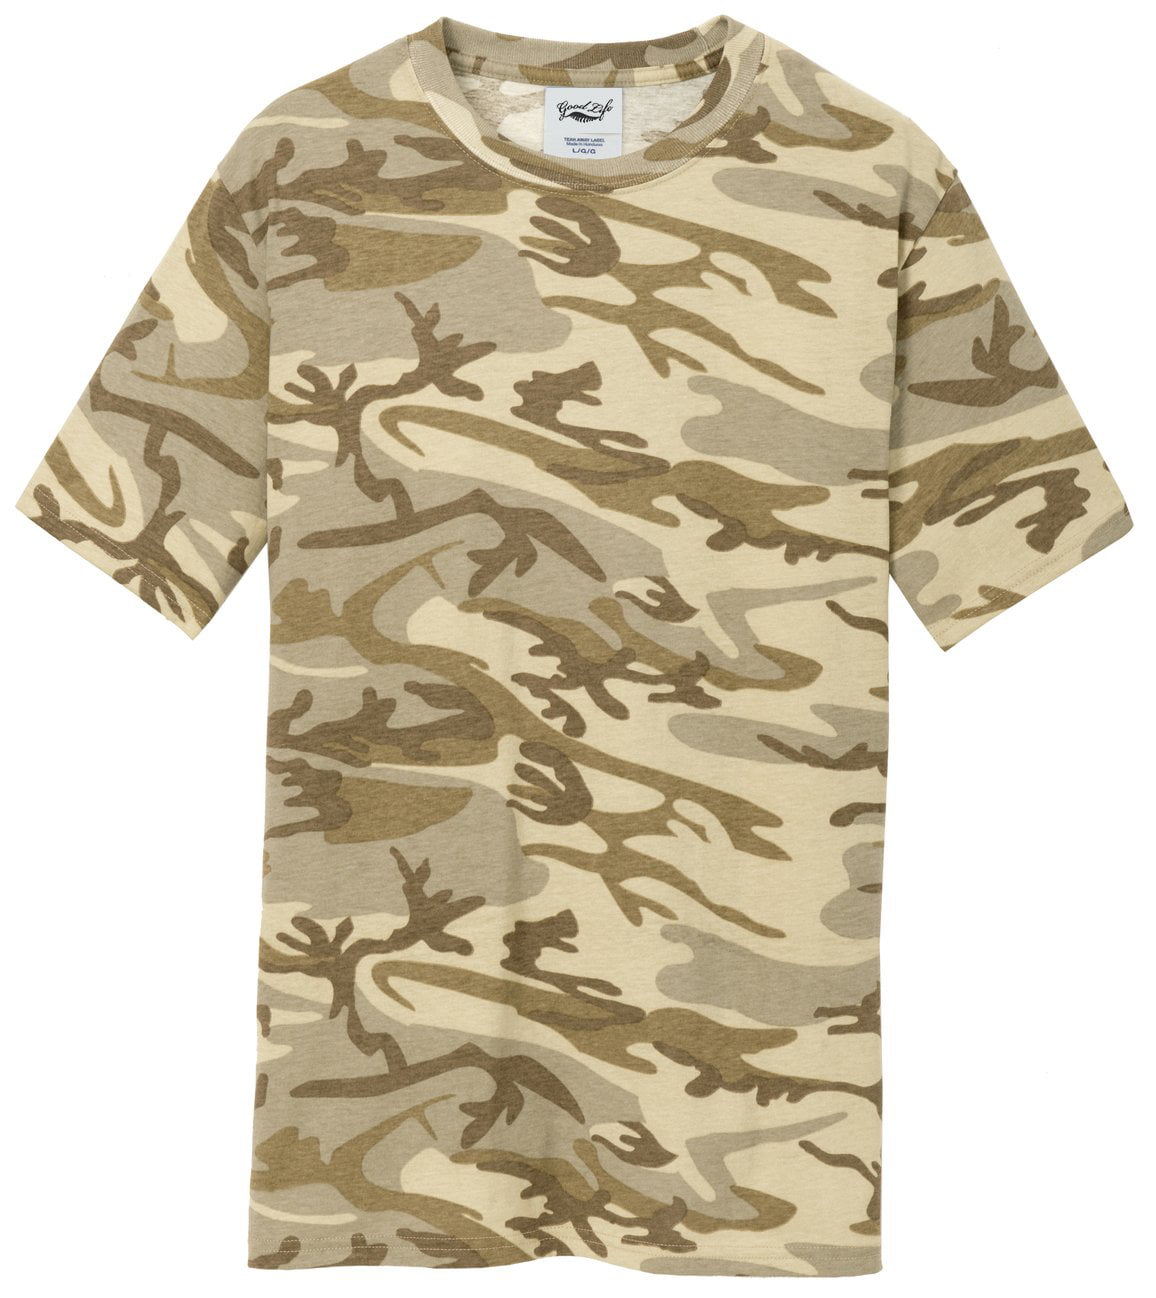 Mens Cotton Camo Tee Shirt Camouflage T-shirts - Walmart.com